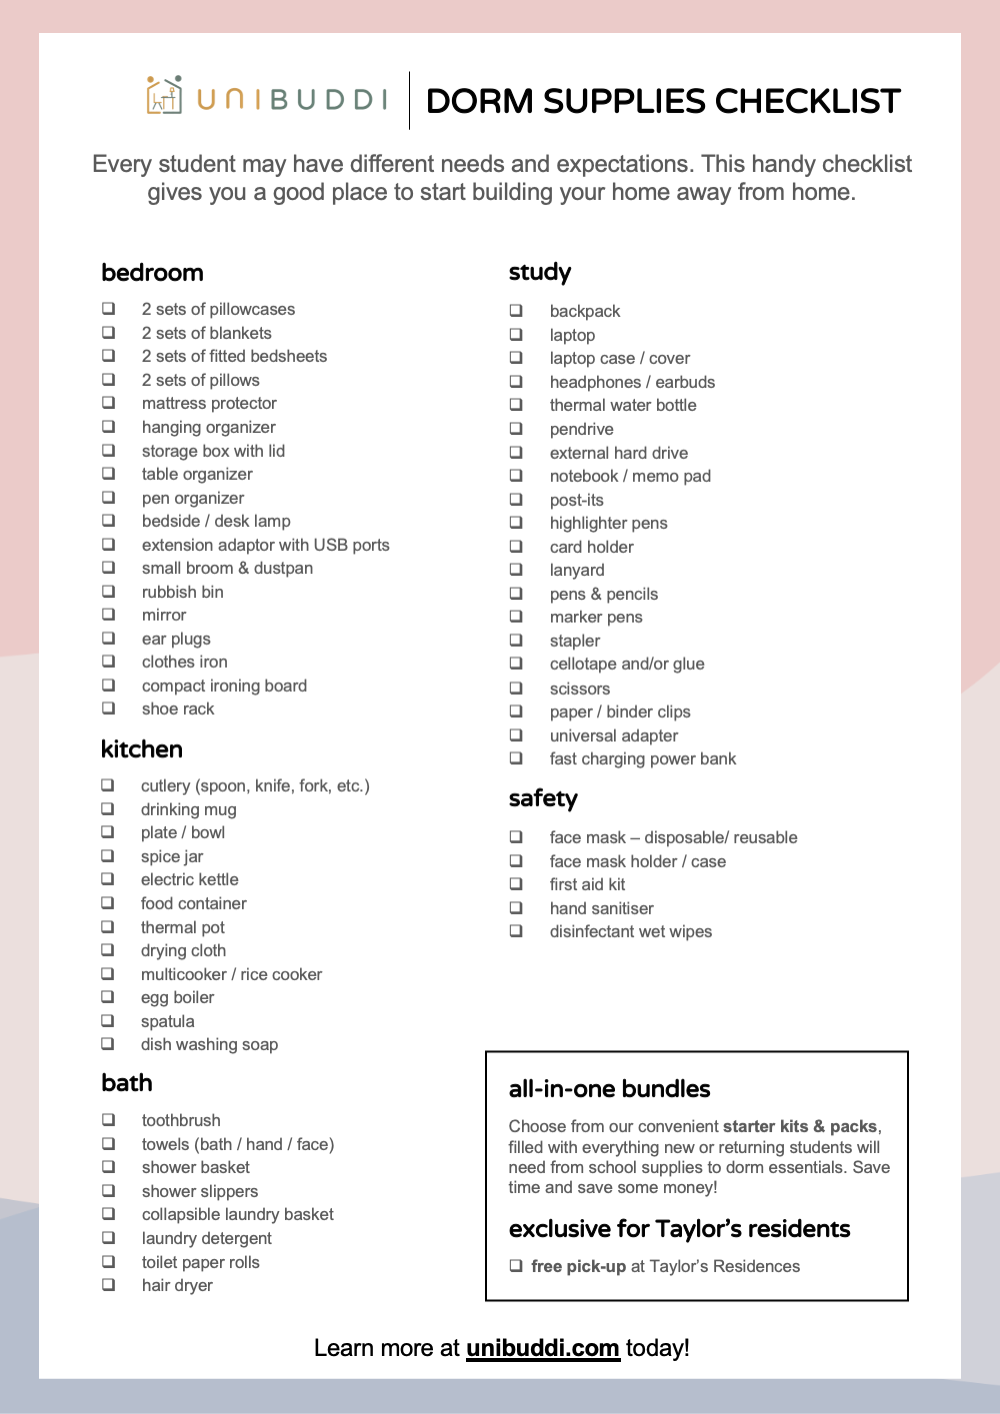 Dorm Supplies Checklist.png